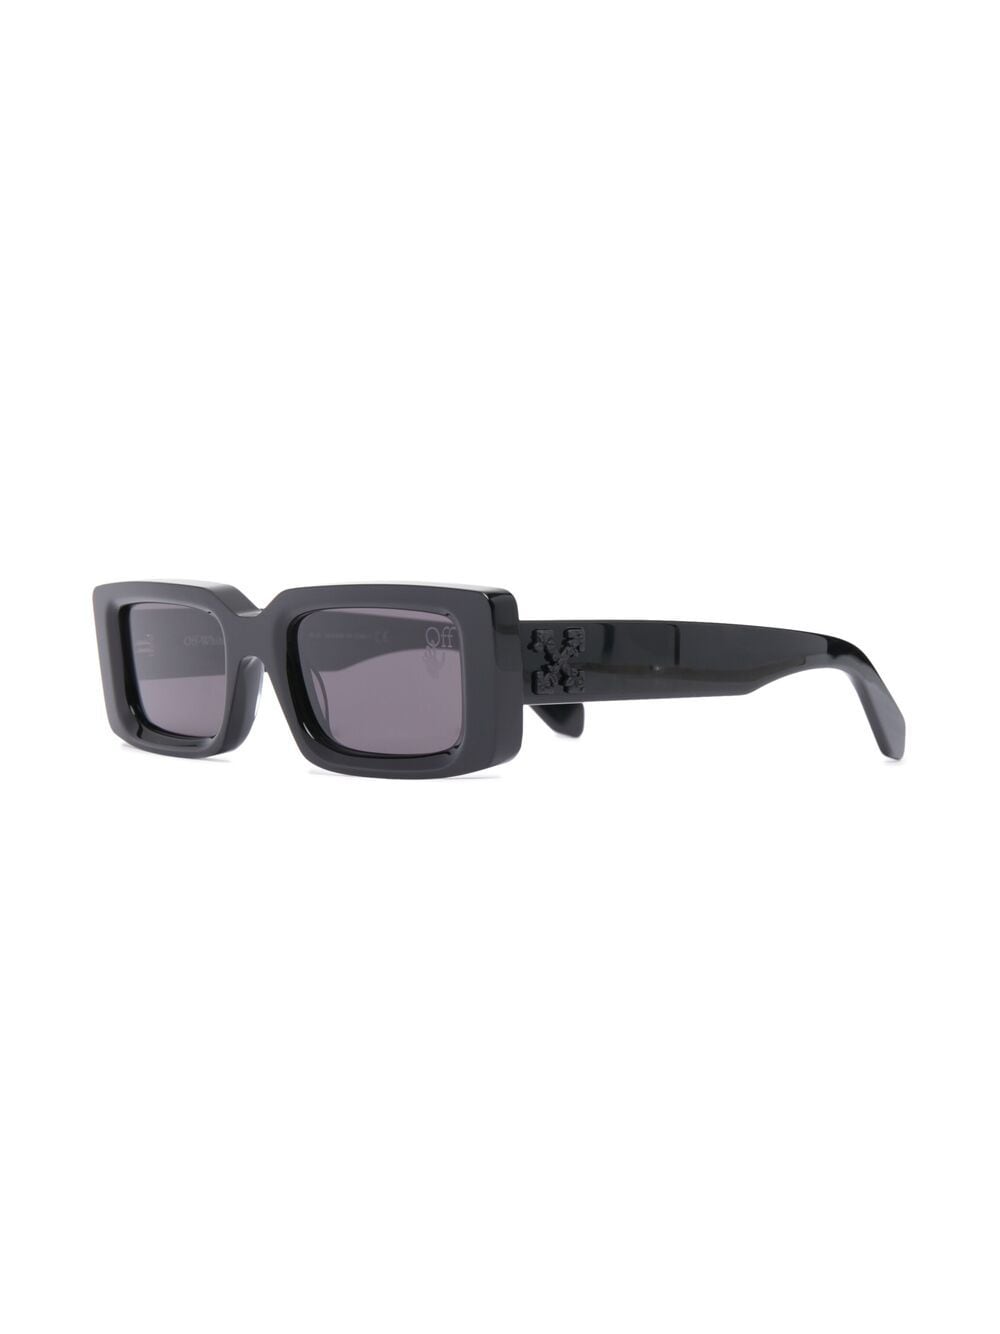 OFF-WHITE Arthur Square Frame Sunglasses Black/Black ...